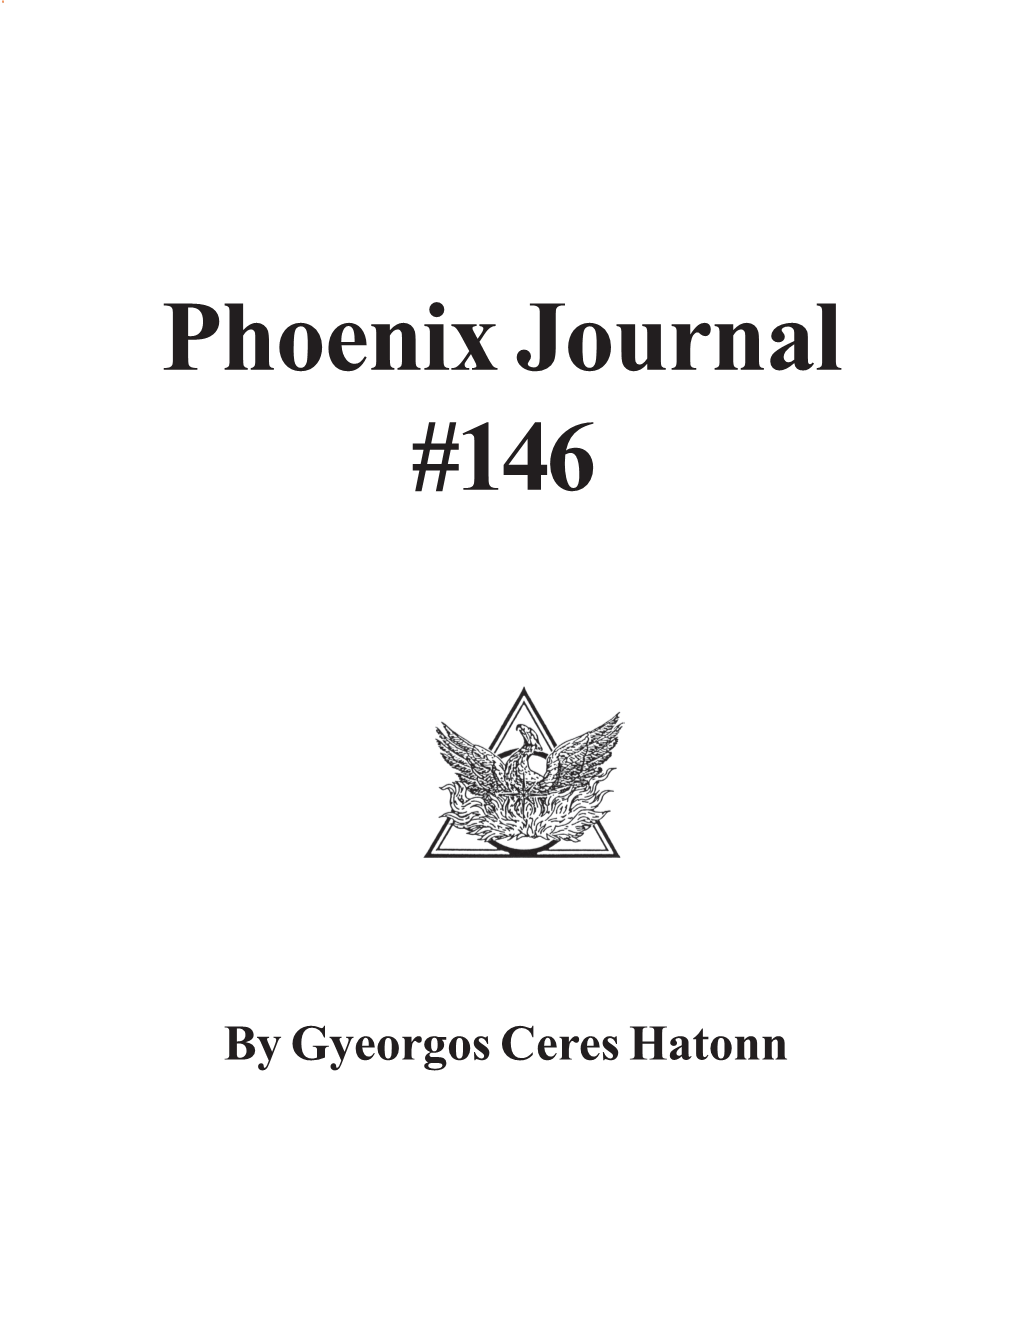 Phoenix Journal #146